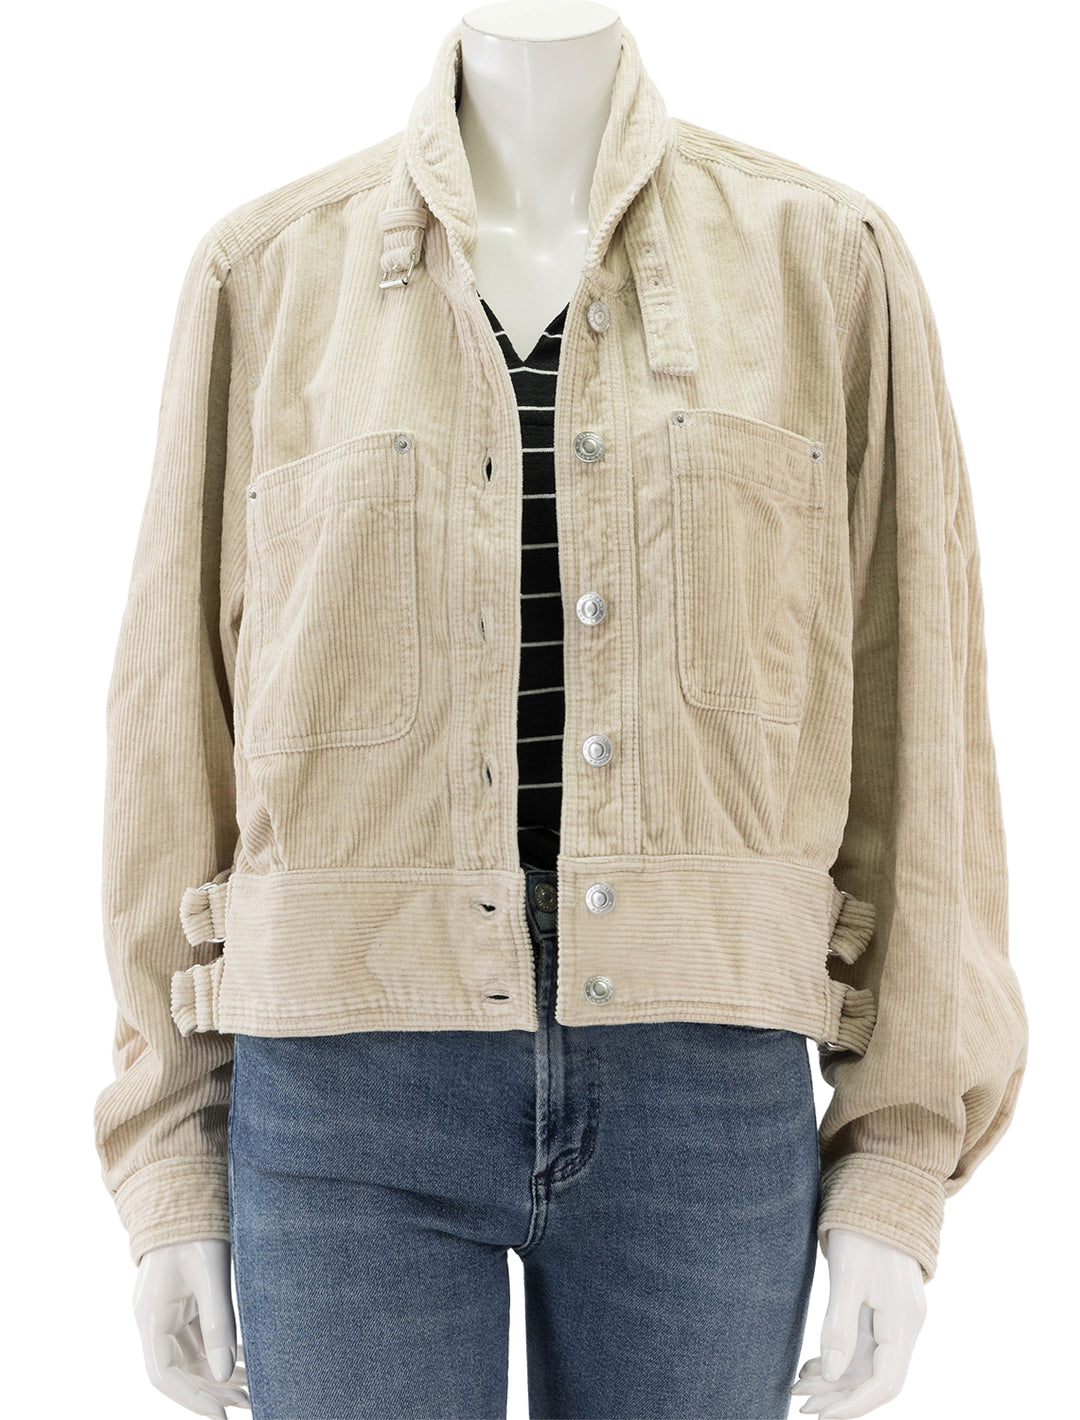 Front view of Isabel Marant Etoile's rashane jacket in beige, unbuttoned.